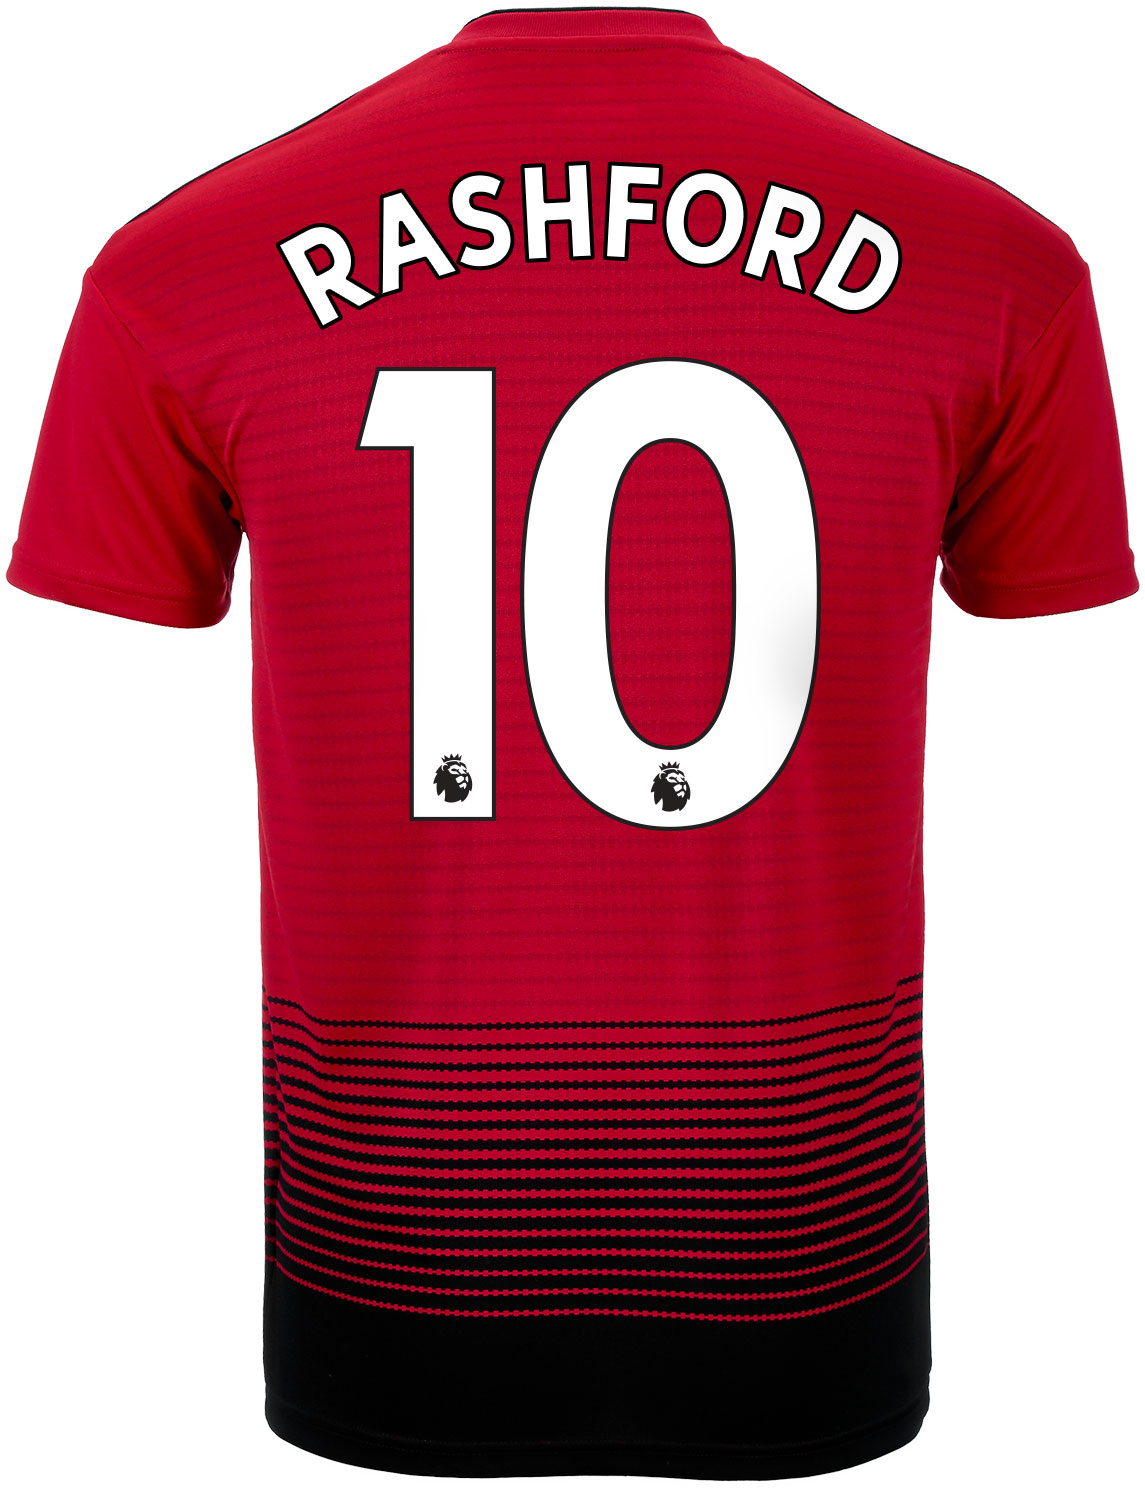 rashford jersey number